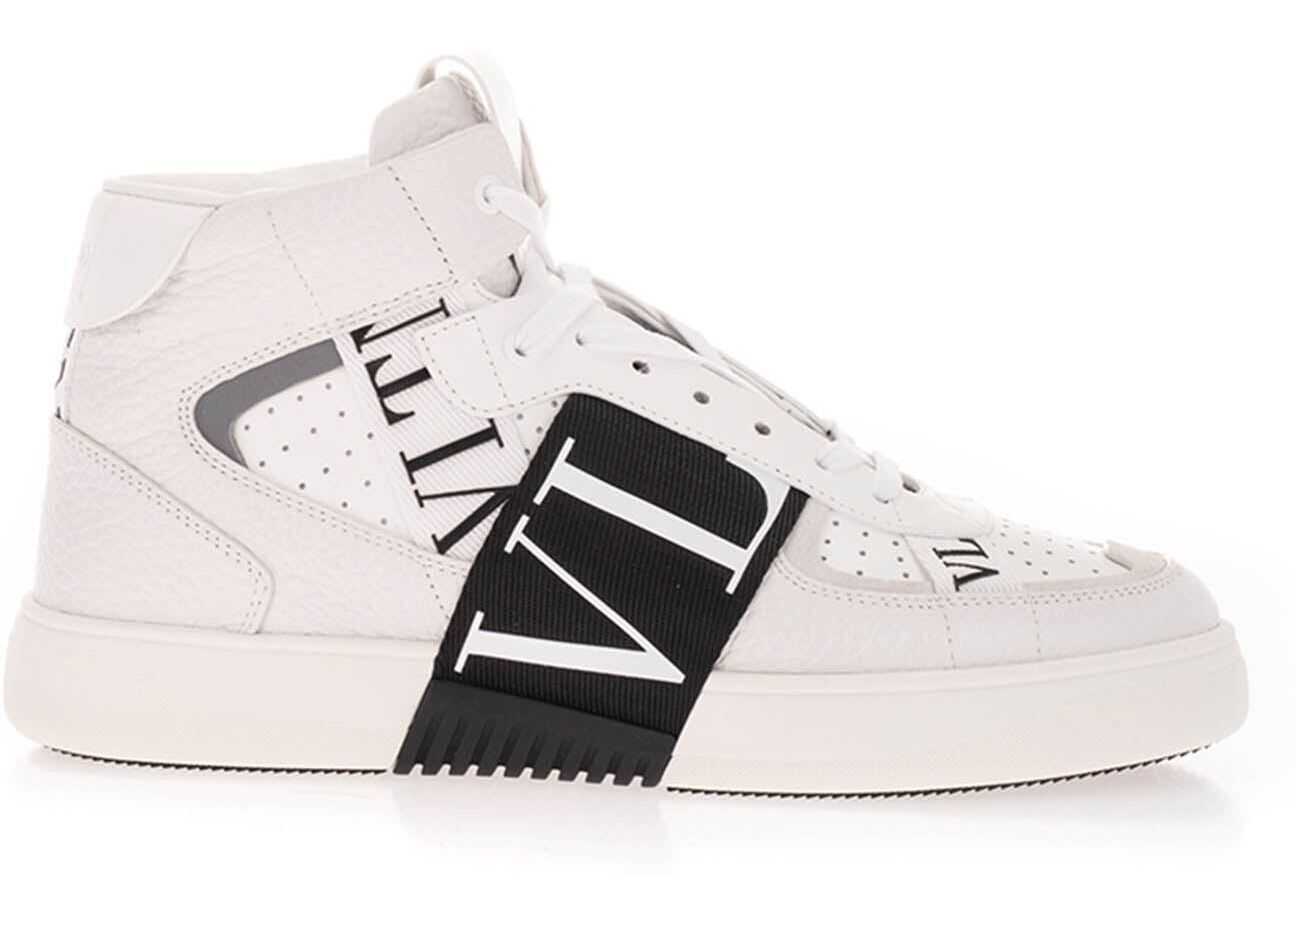 Valentino Garavani Vl7N High Top Sneakers In White And Black White